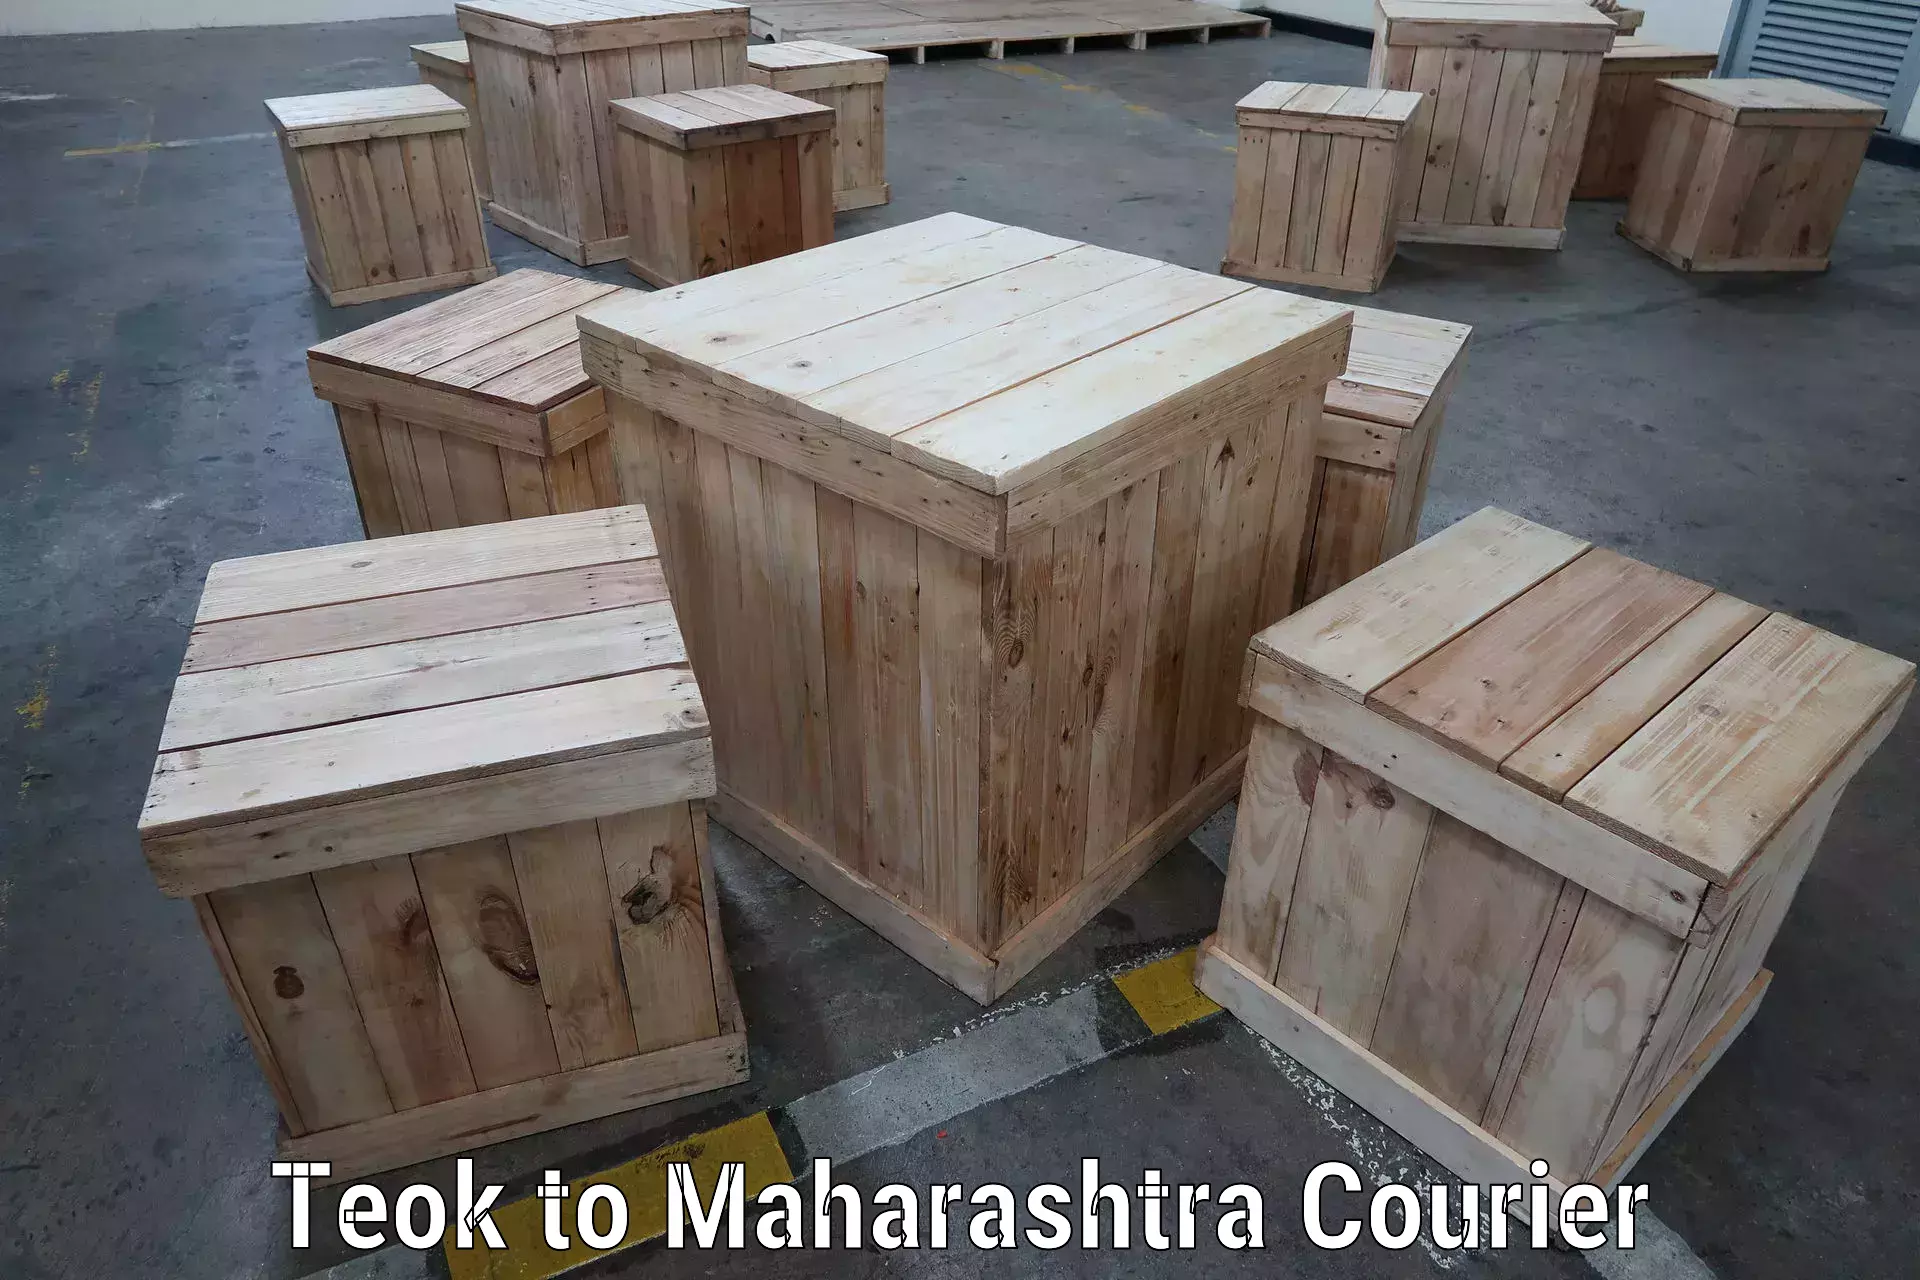 Multi-city courier Teok to Maharashtra